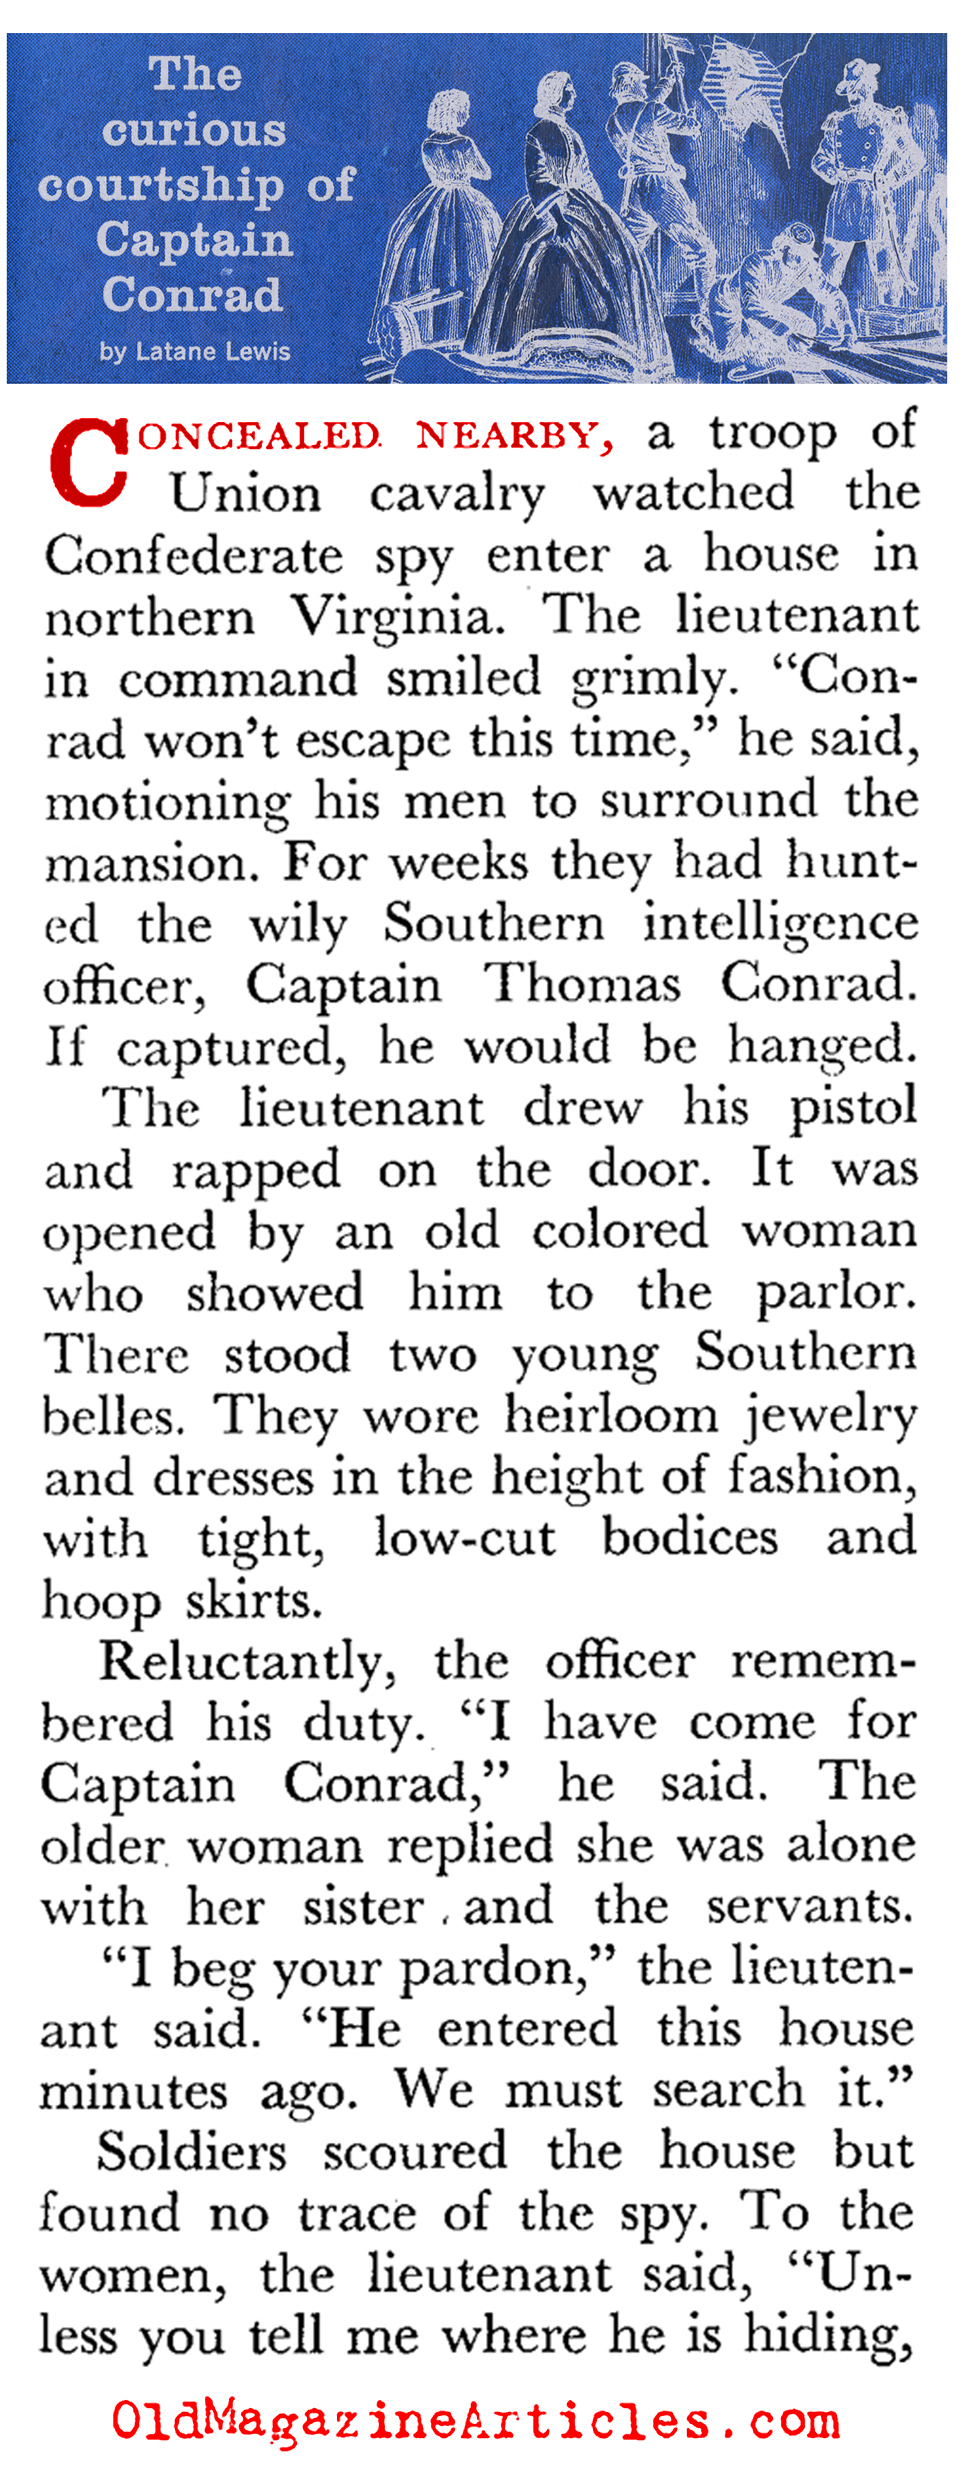 The Life-Saving Capabilities of Victorian Fashion (Coronet Magazine, 1960)